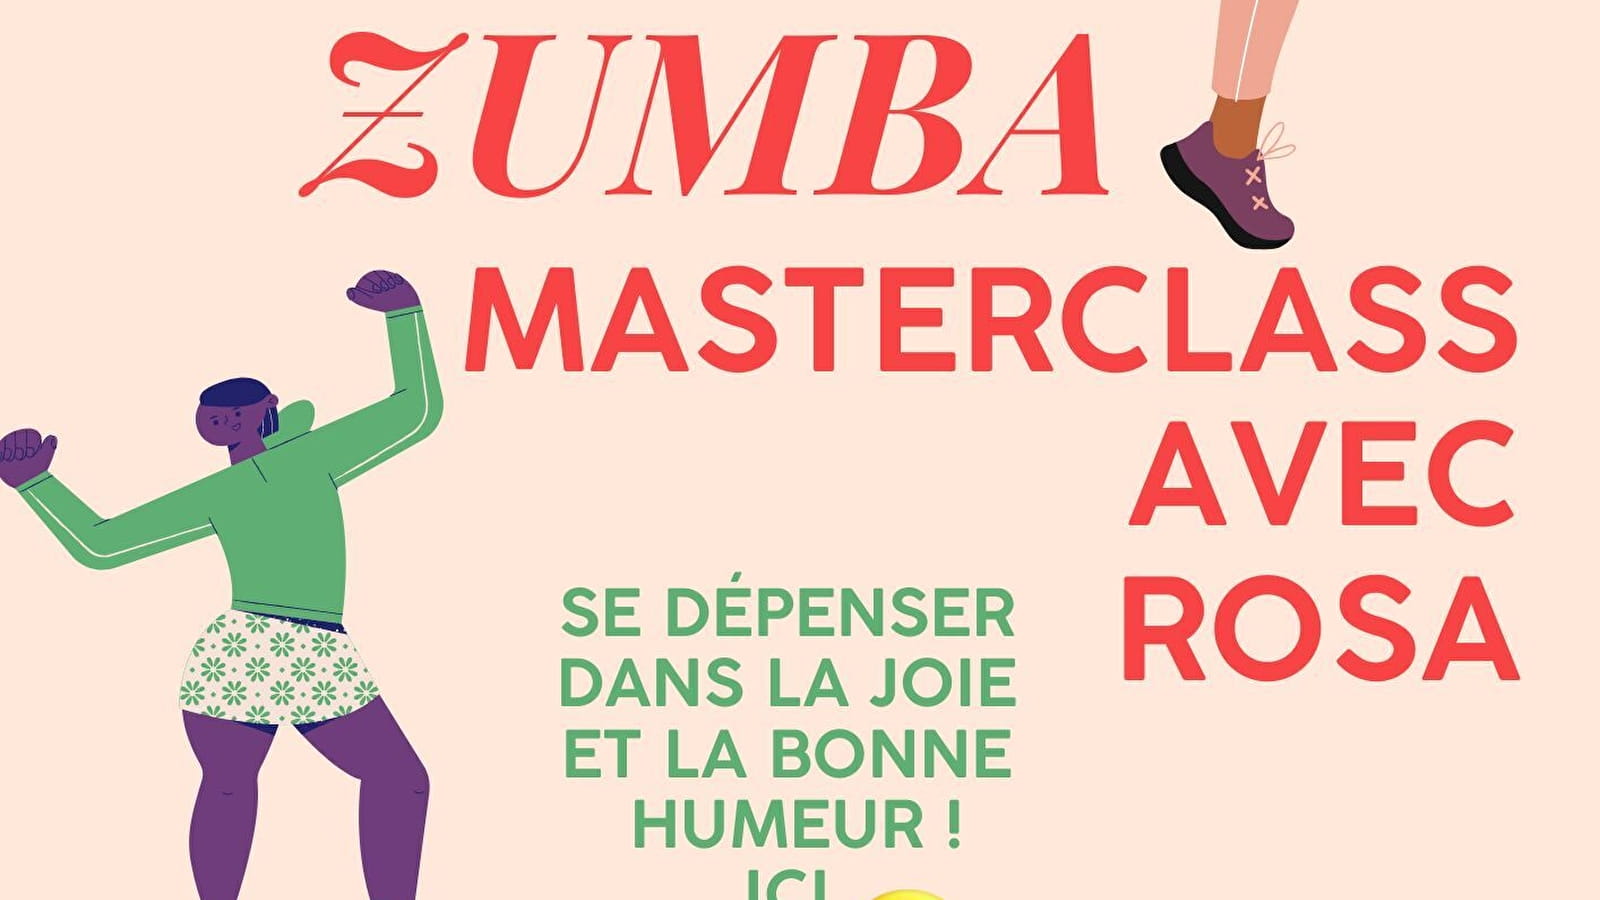 Zumba: Spring Masterclass!